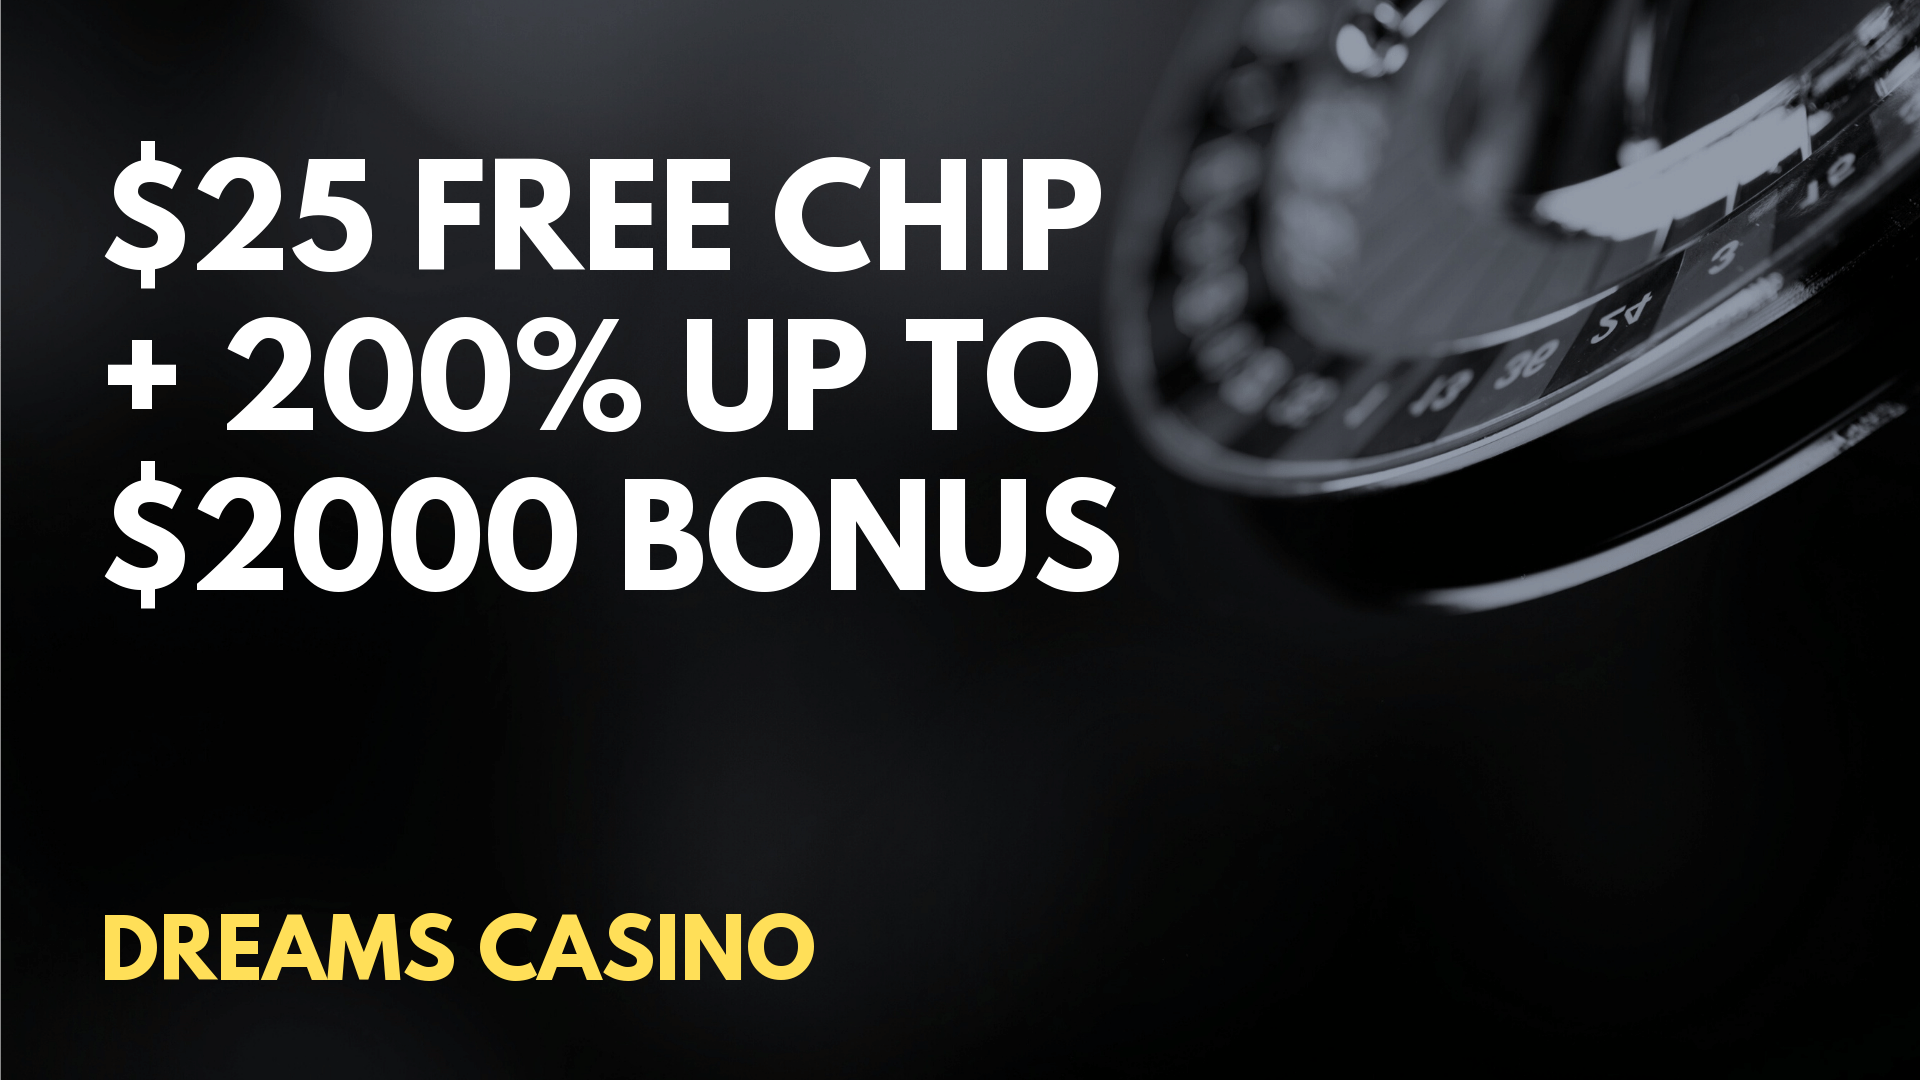 ⭐ Dreams Casino 25 Free Chip + 200 Up To 2000 Mixed Bonus